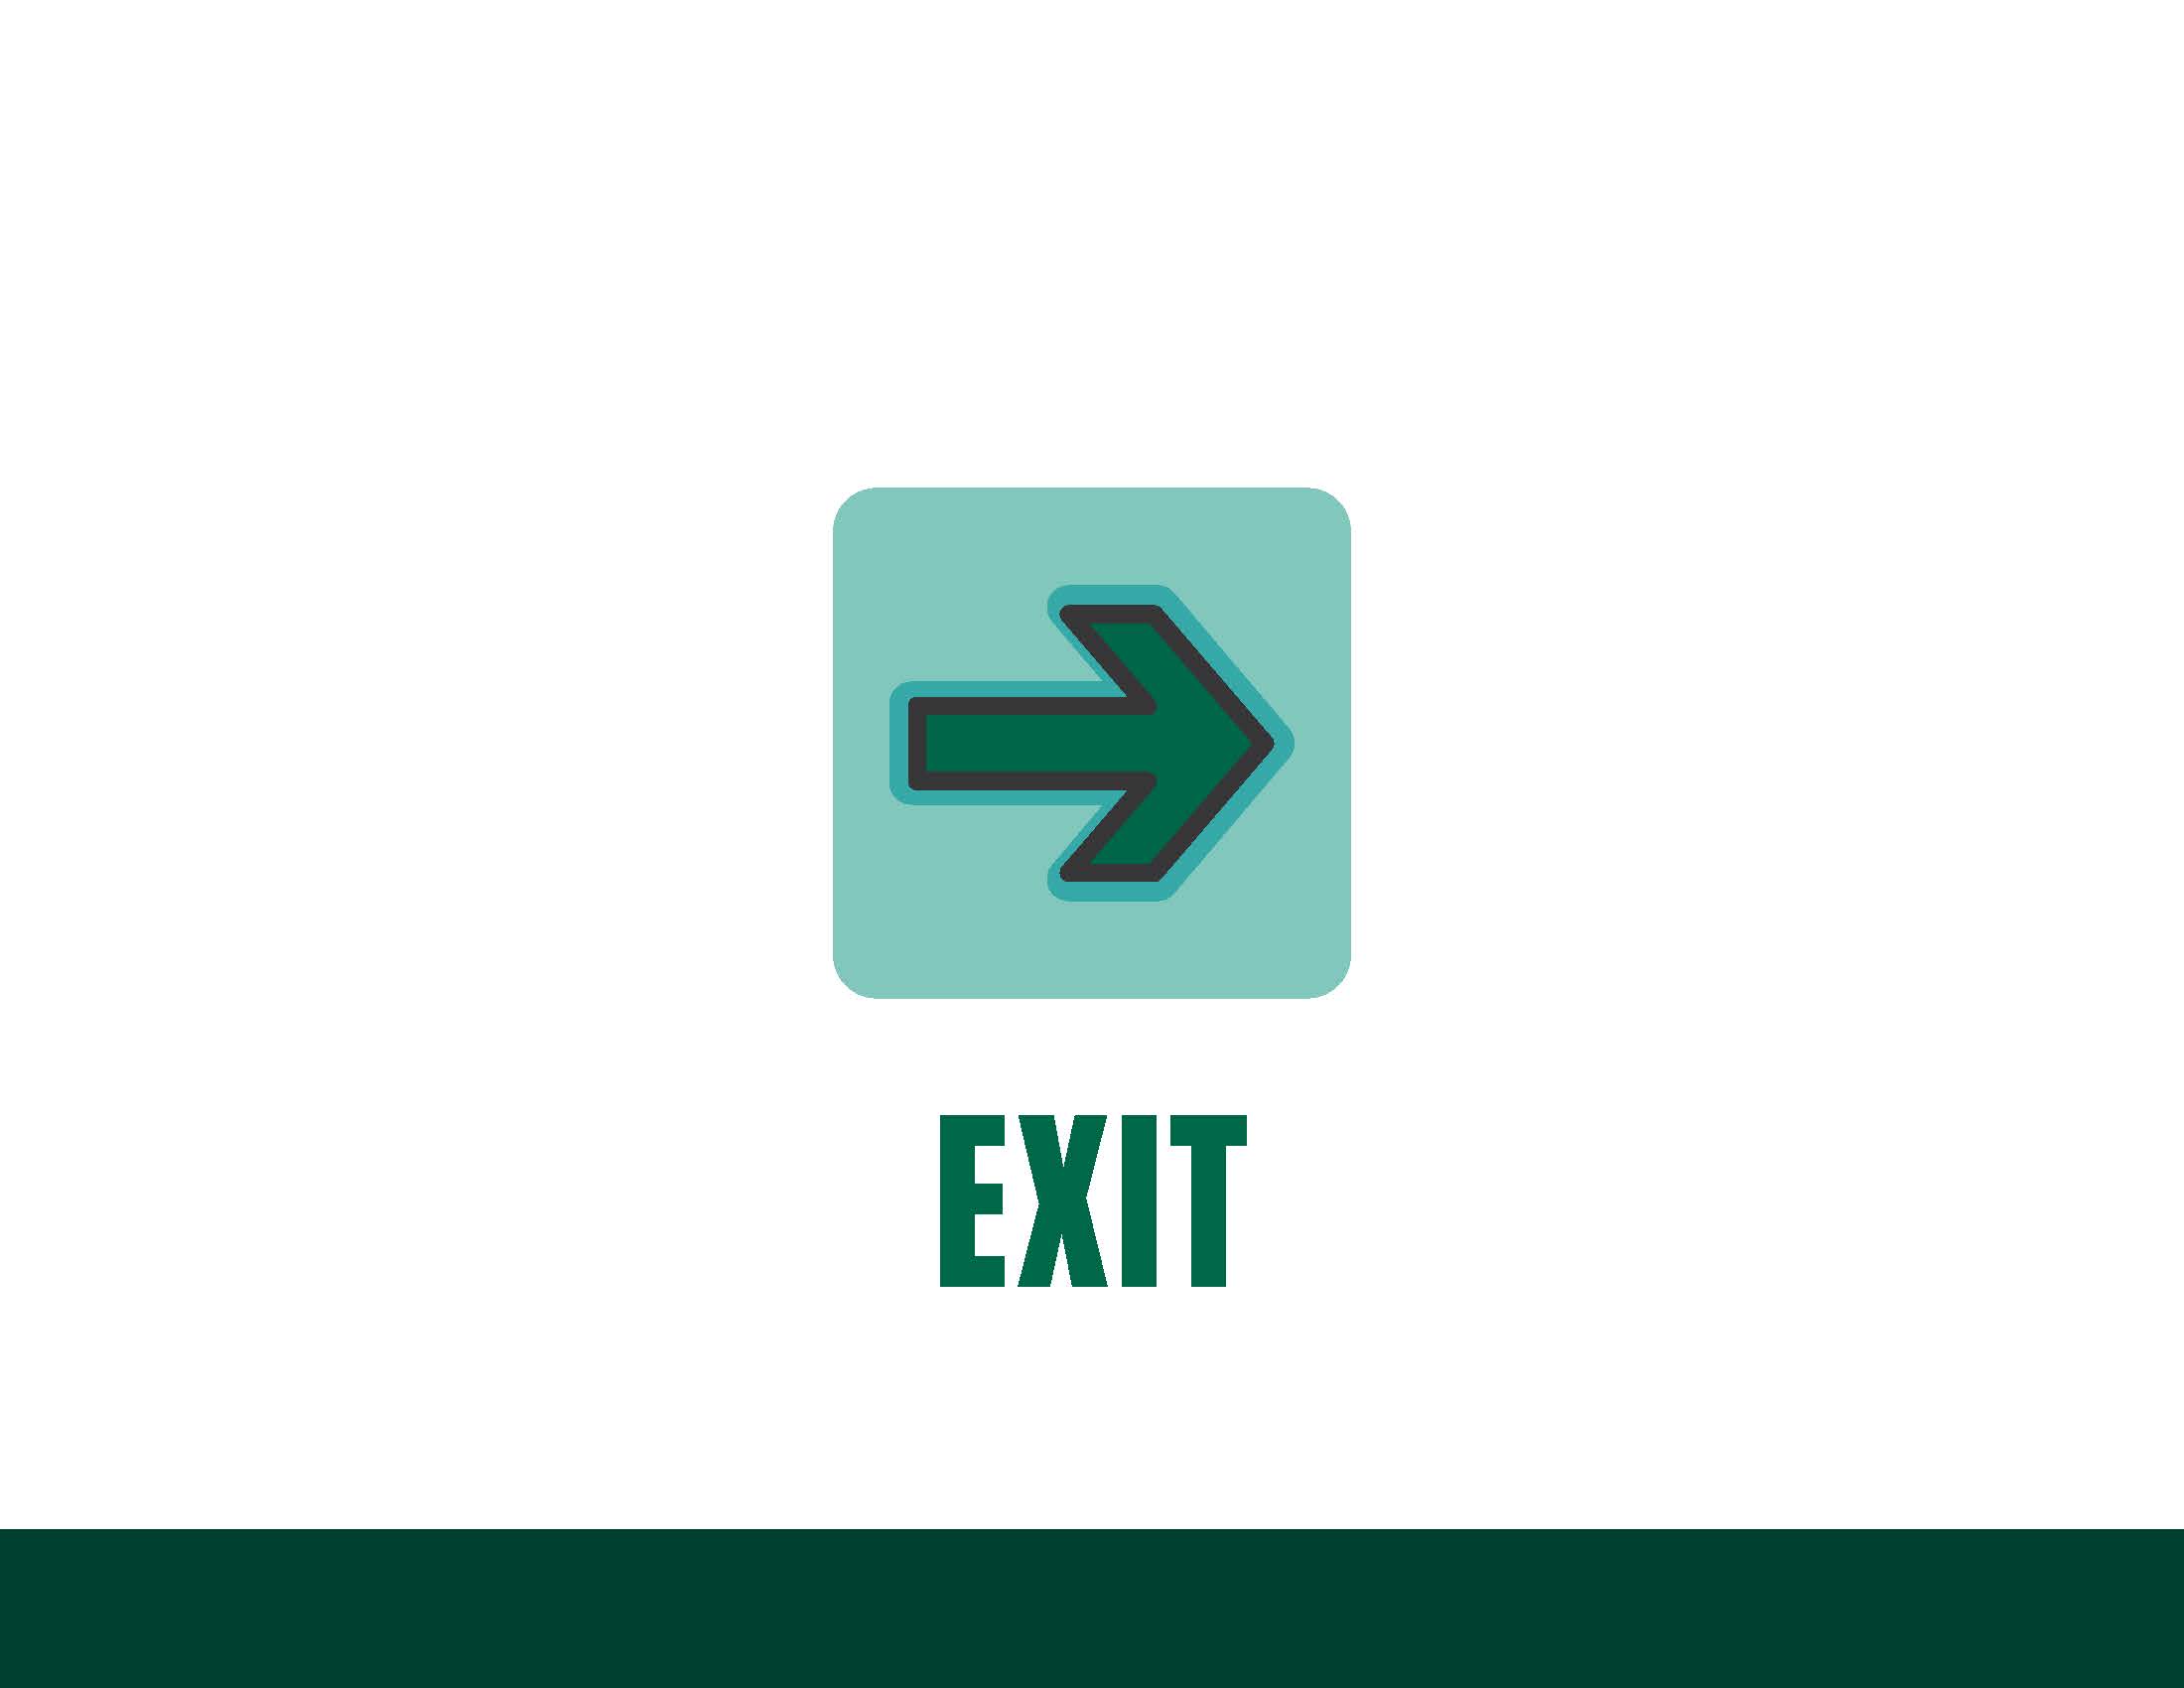 COVID sign - exit, right arrow